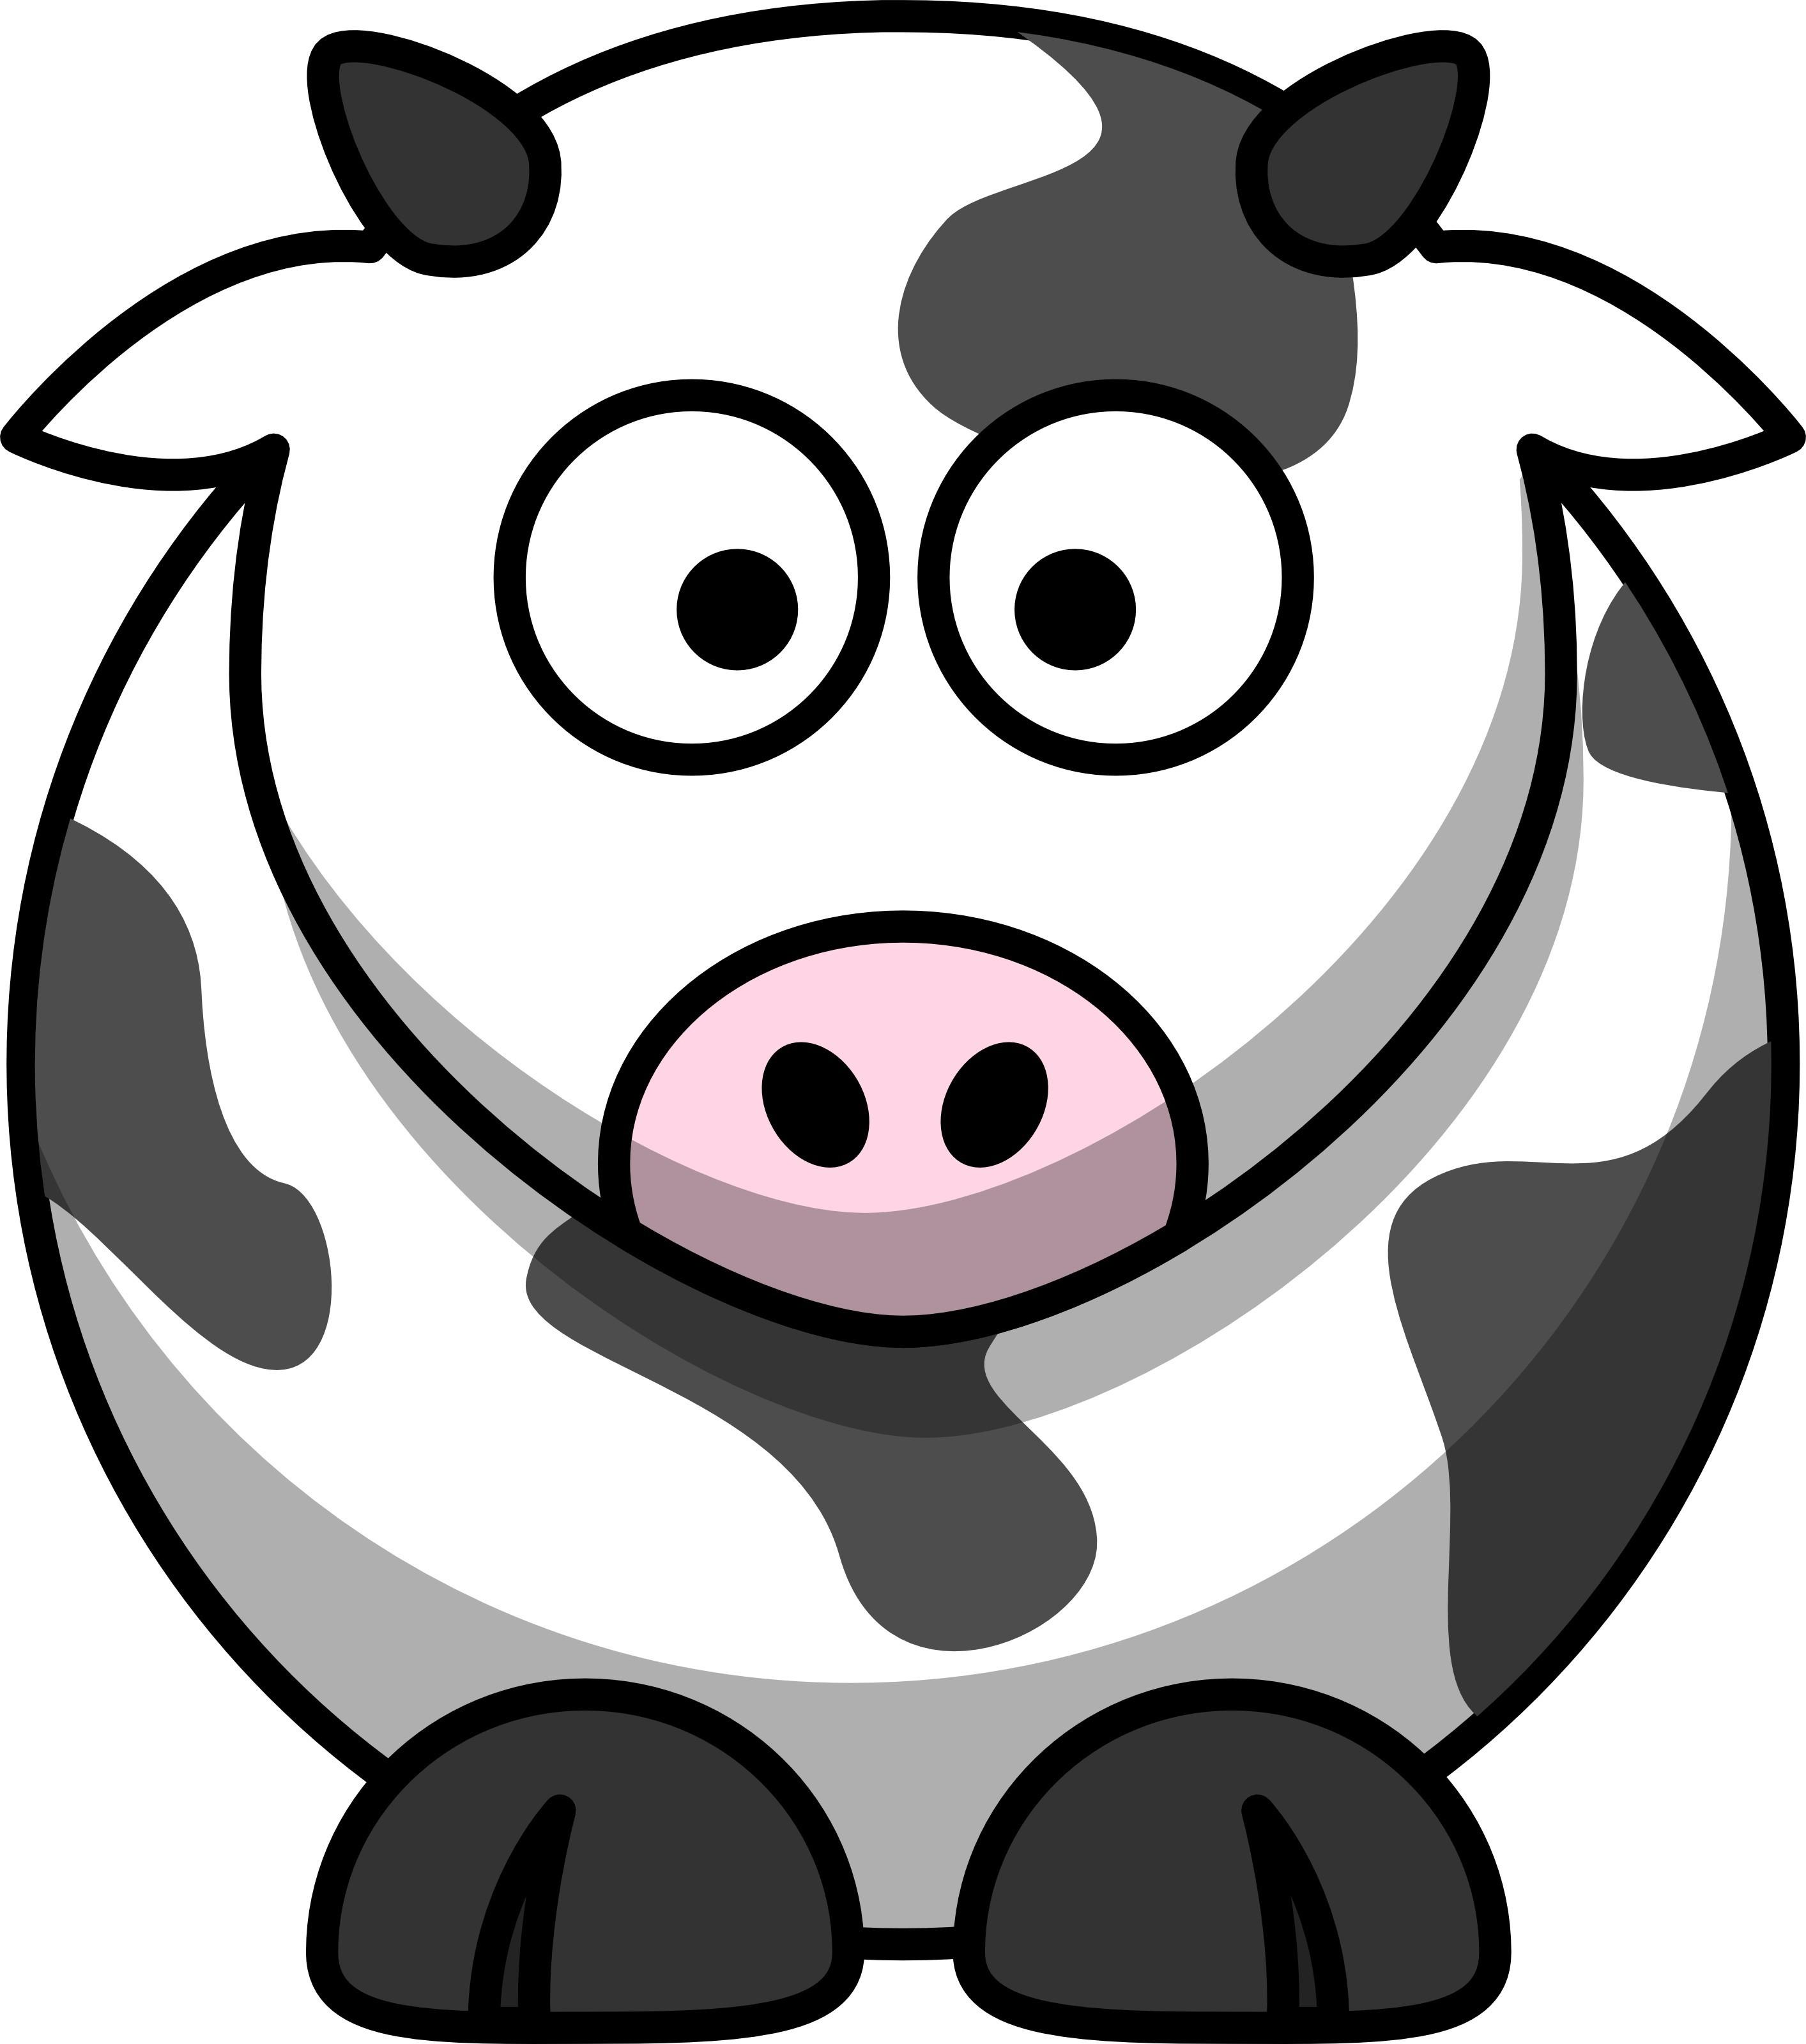 Free Baby Animal Cartoon Image, Download Free Clip Art, Free Clip